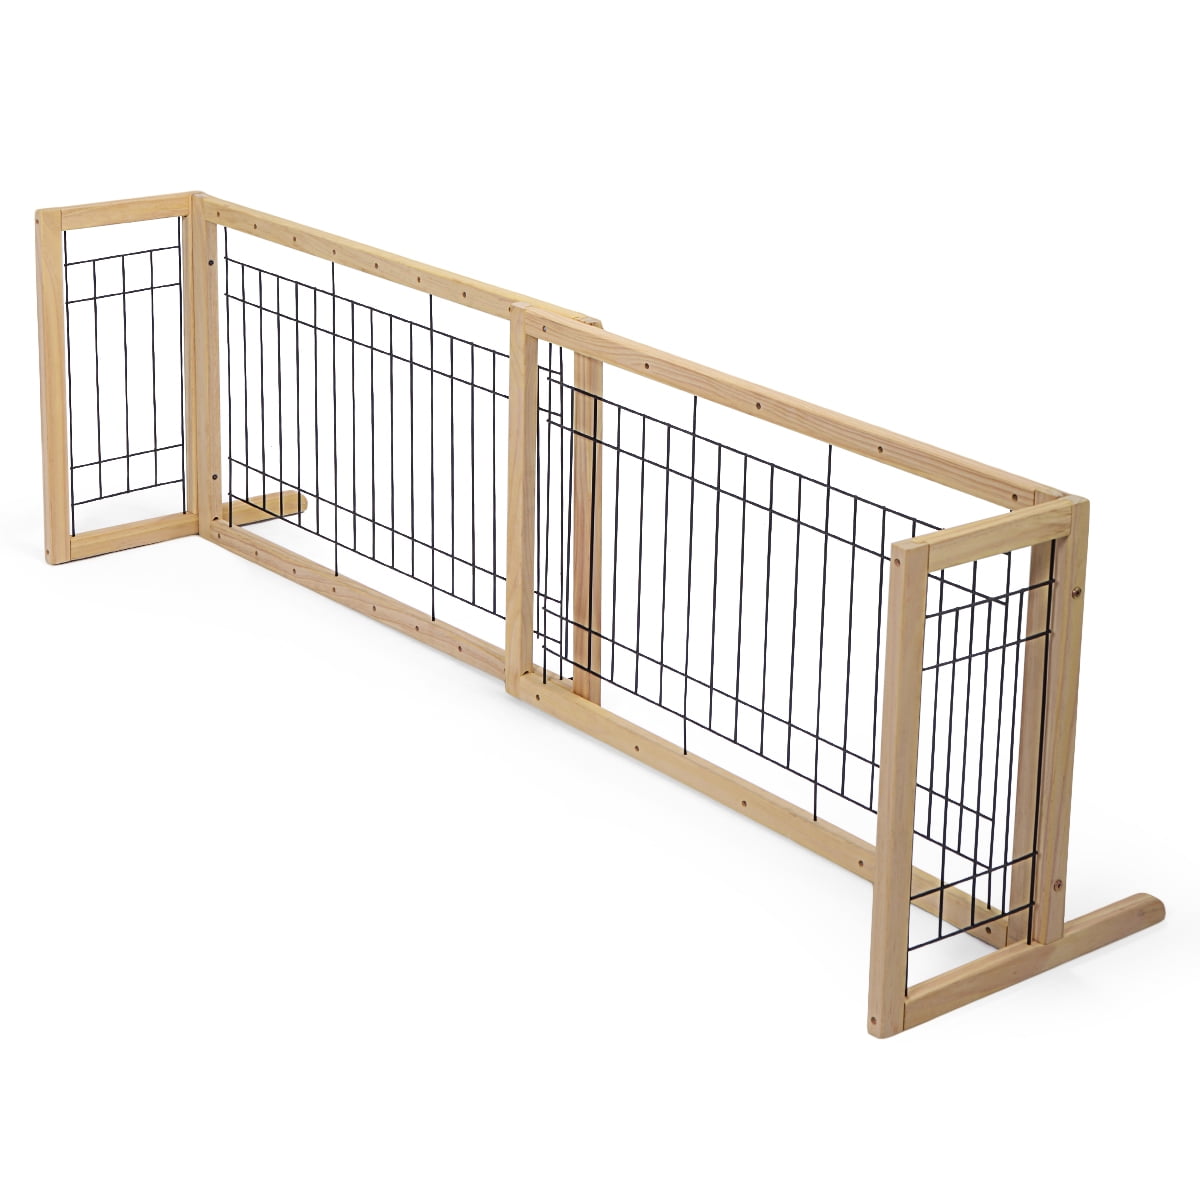 Adjustable Wood Dog Gate Indoor Solid Construction Pet Fence Playpen Free Stand 